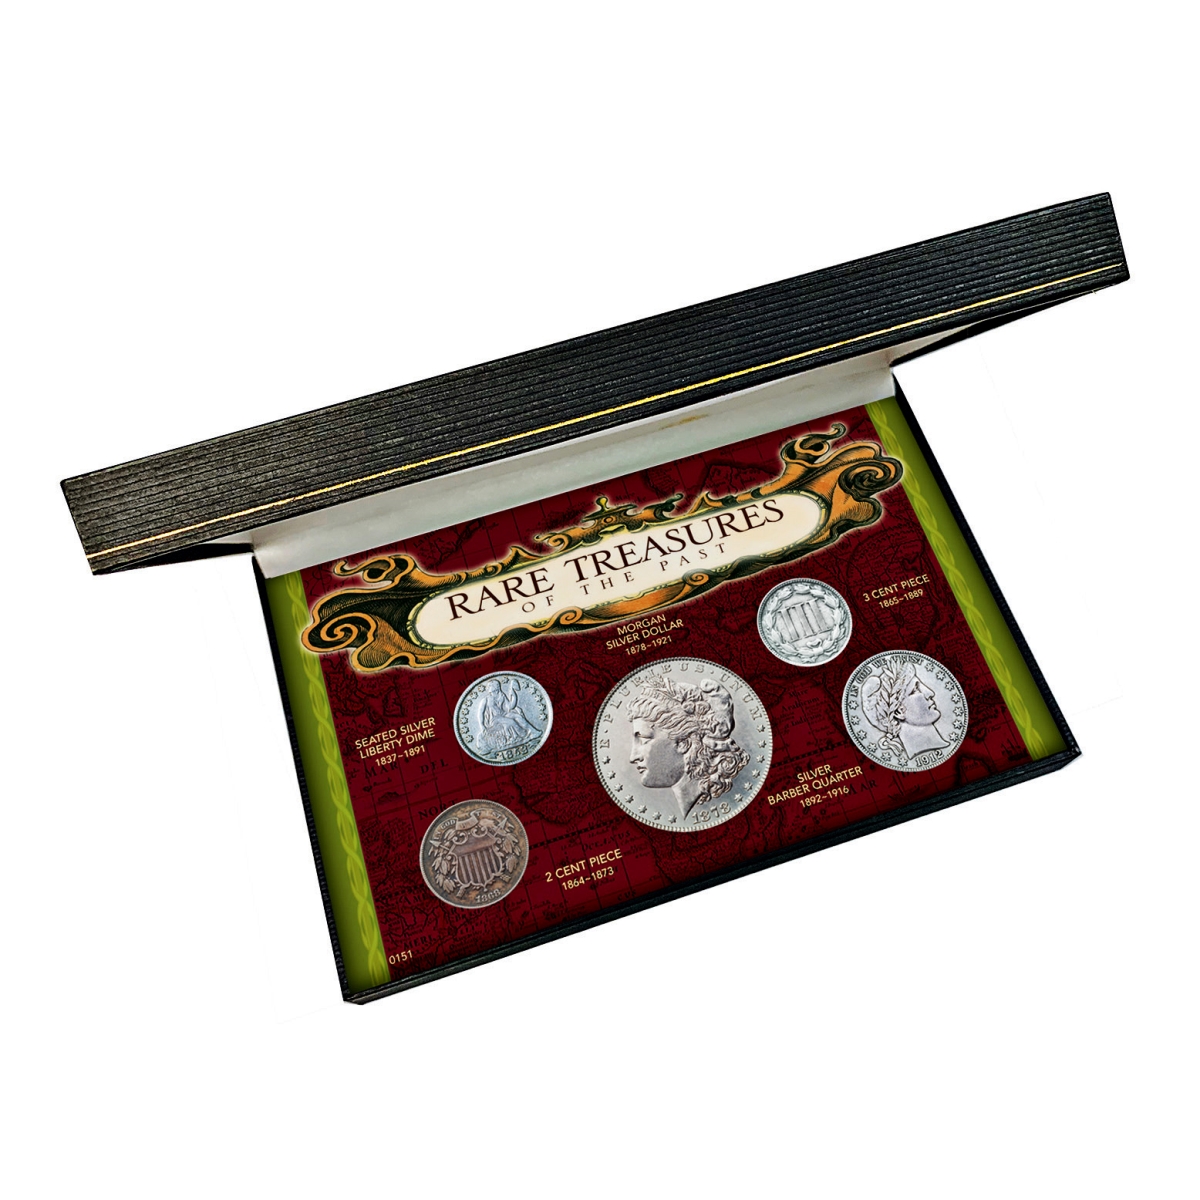 151 Rare Treasures of the Past Coins Display Box -  UPM Global